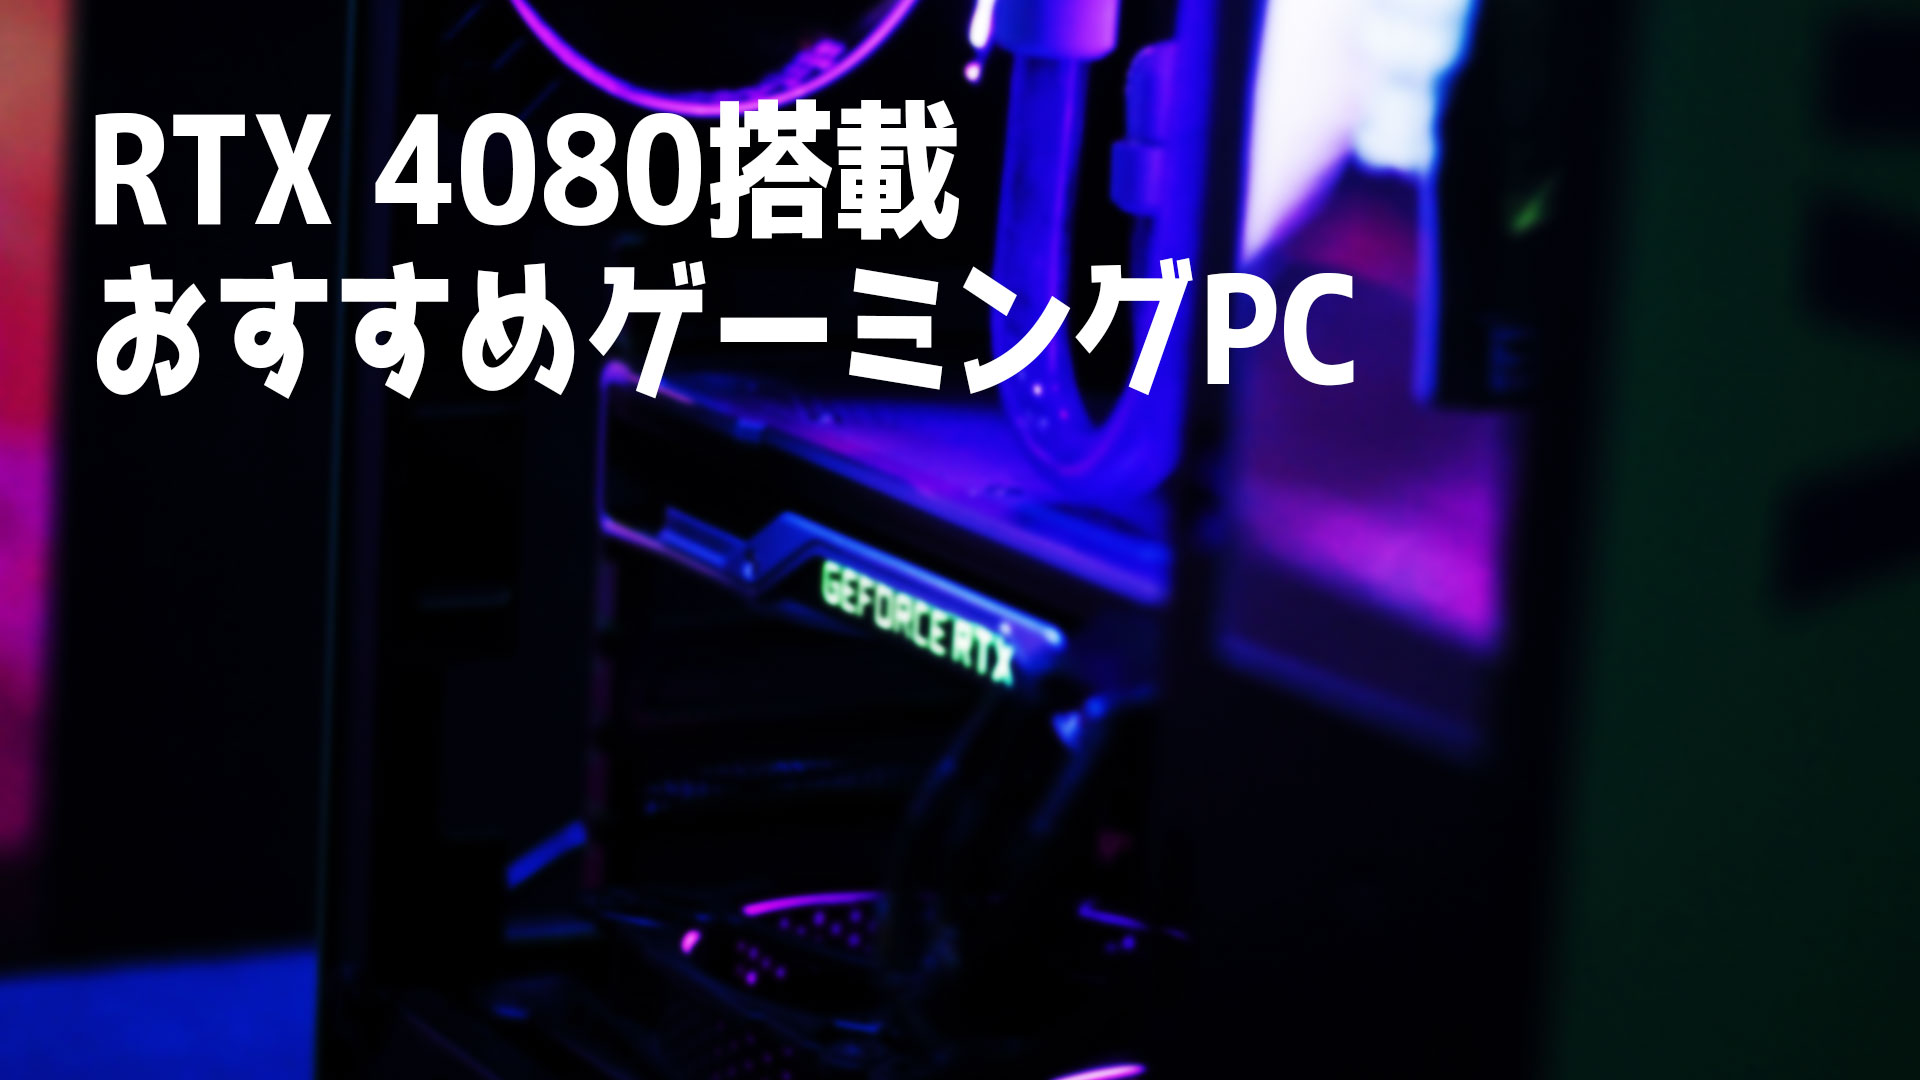 NVIDIA GeForce RTX 4080搭載のおすすめゲーミングPC4選 – クスノキの家